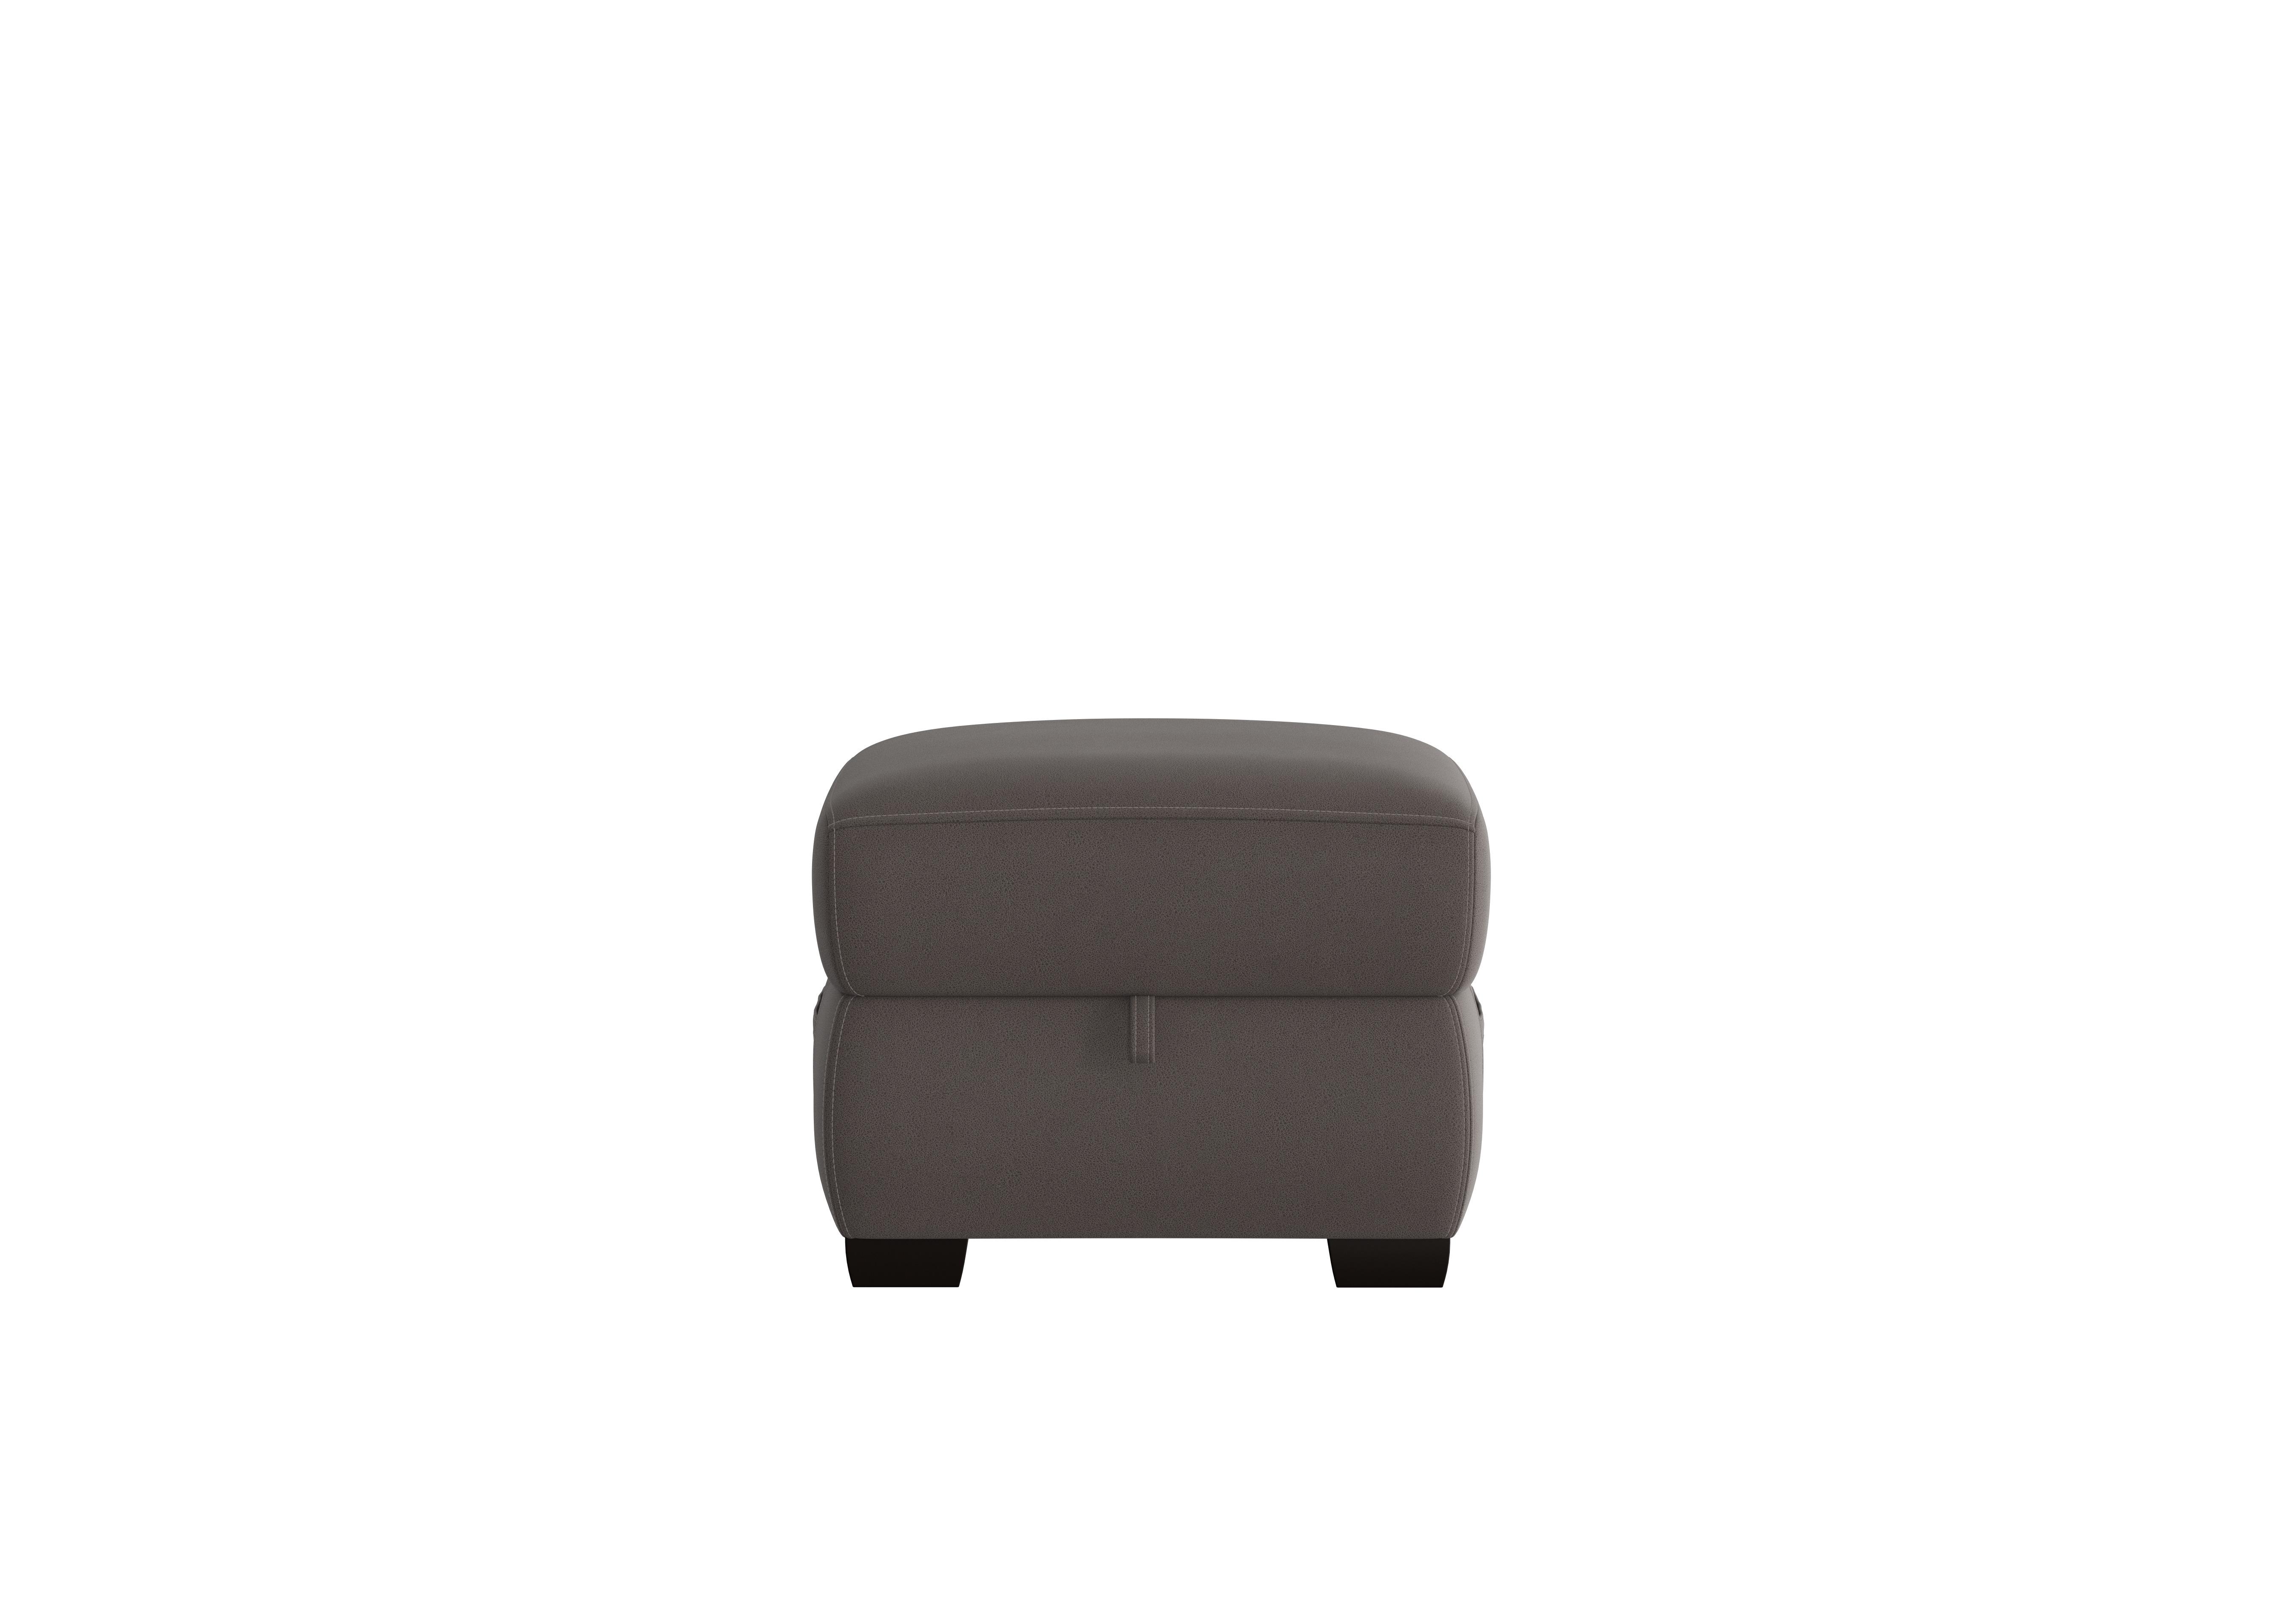 Starlight Express Fabric Storage Footstool in Bfa-Blj-R16 Grey on Furniture Village